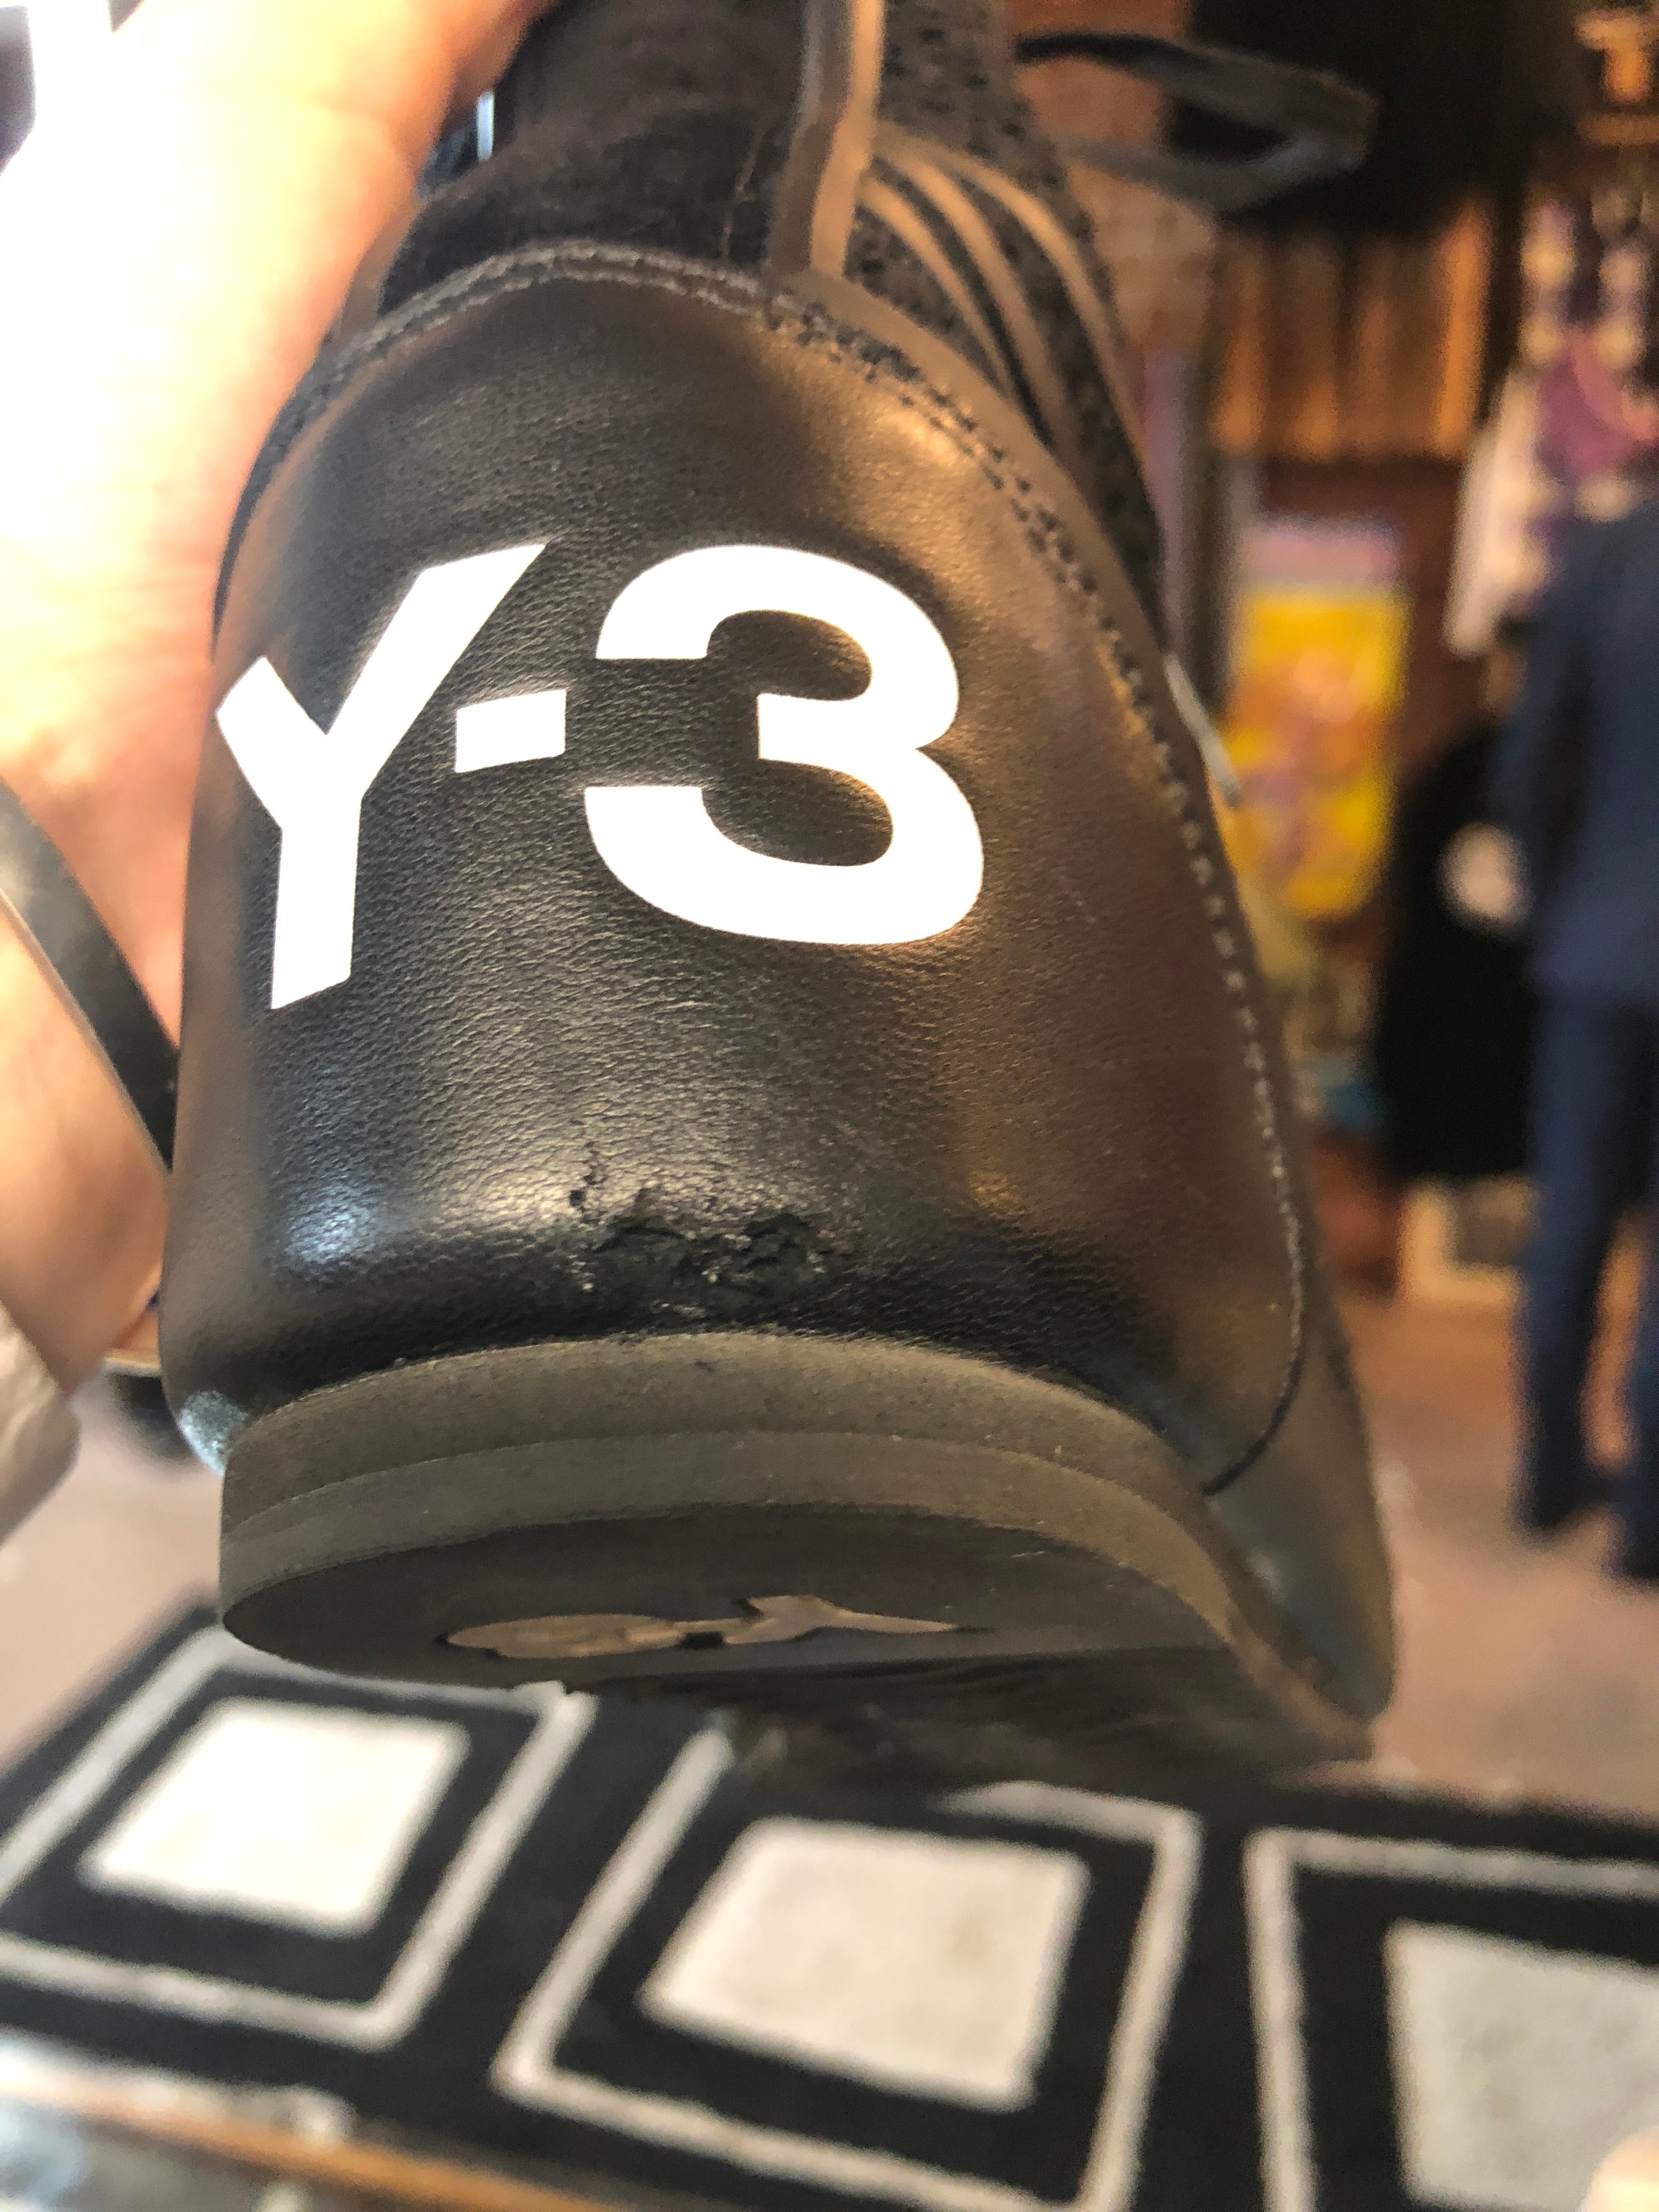 Y-3 Yohi Yamamoto X Adidas boxing boots 40